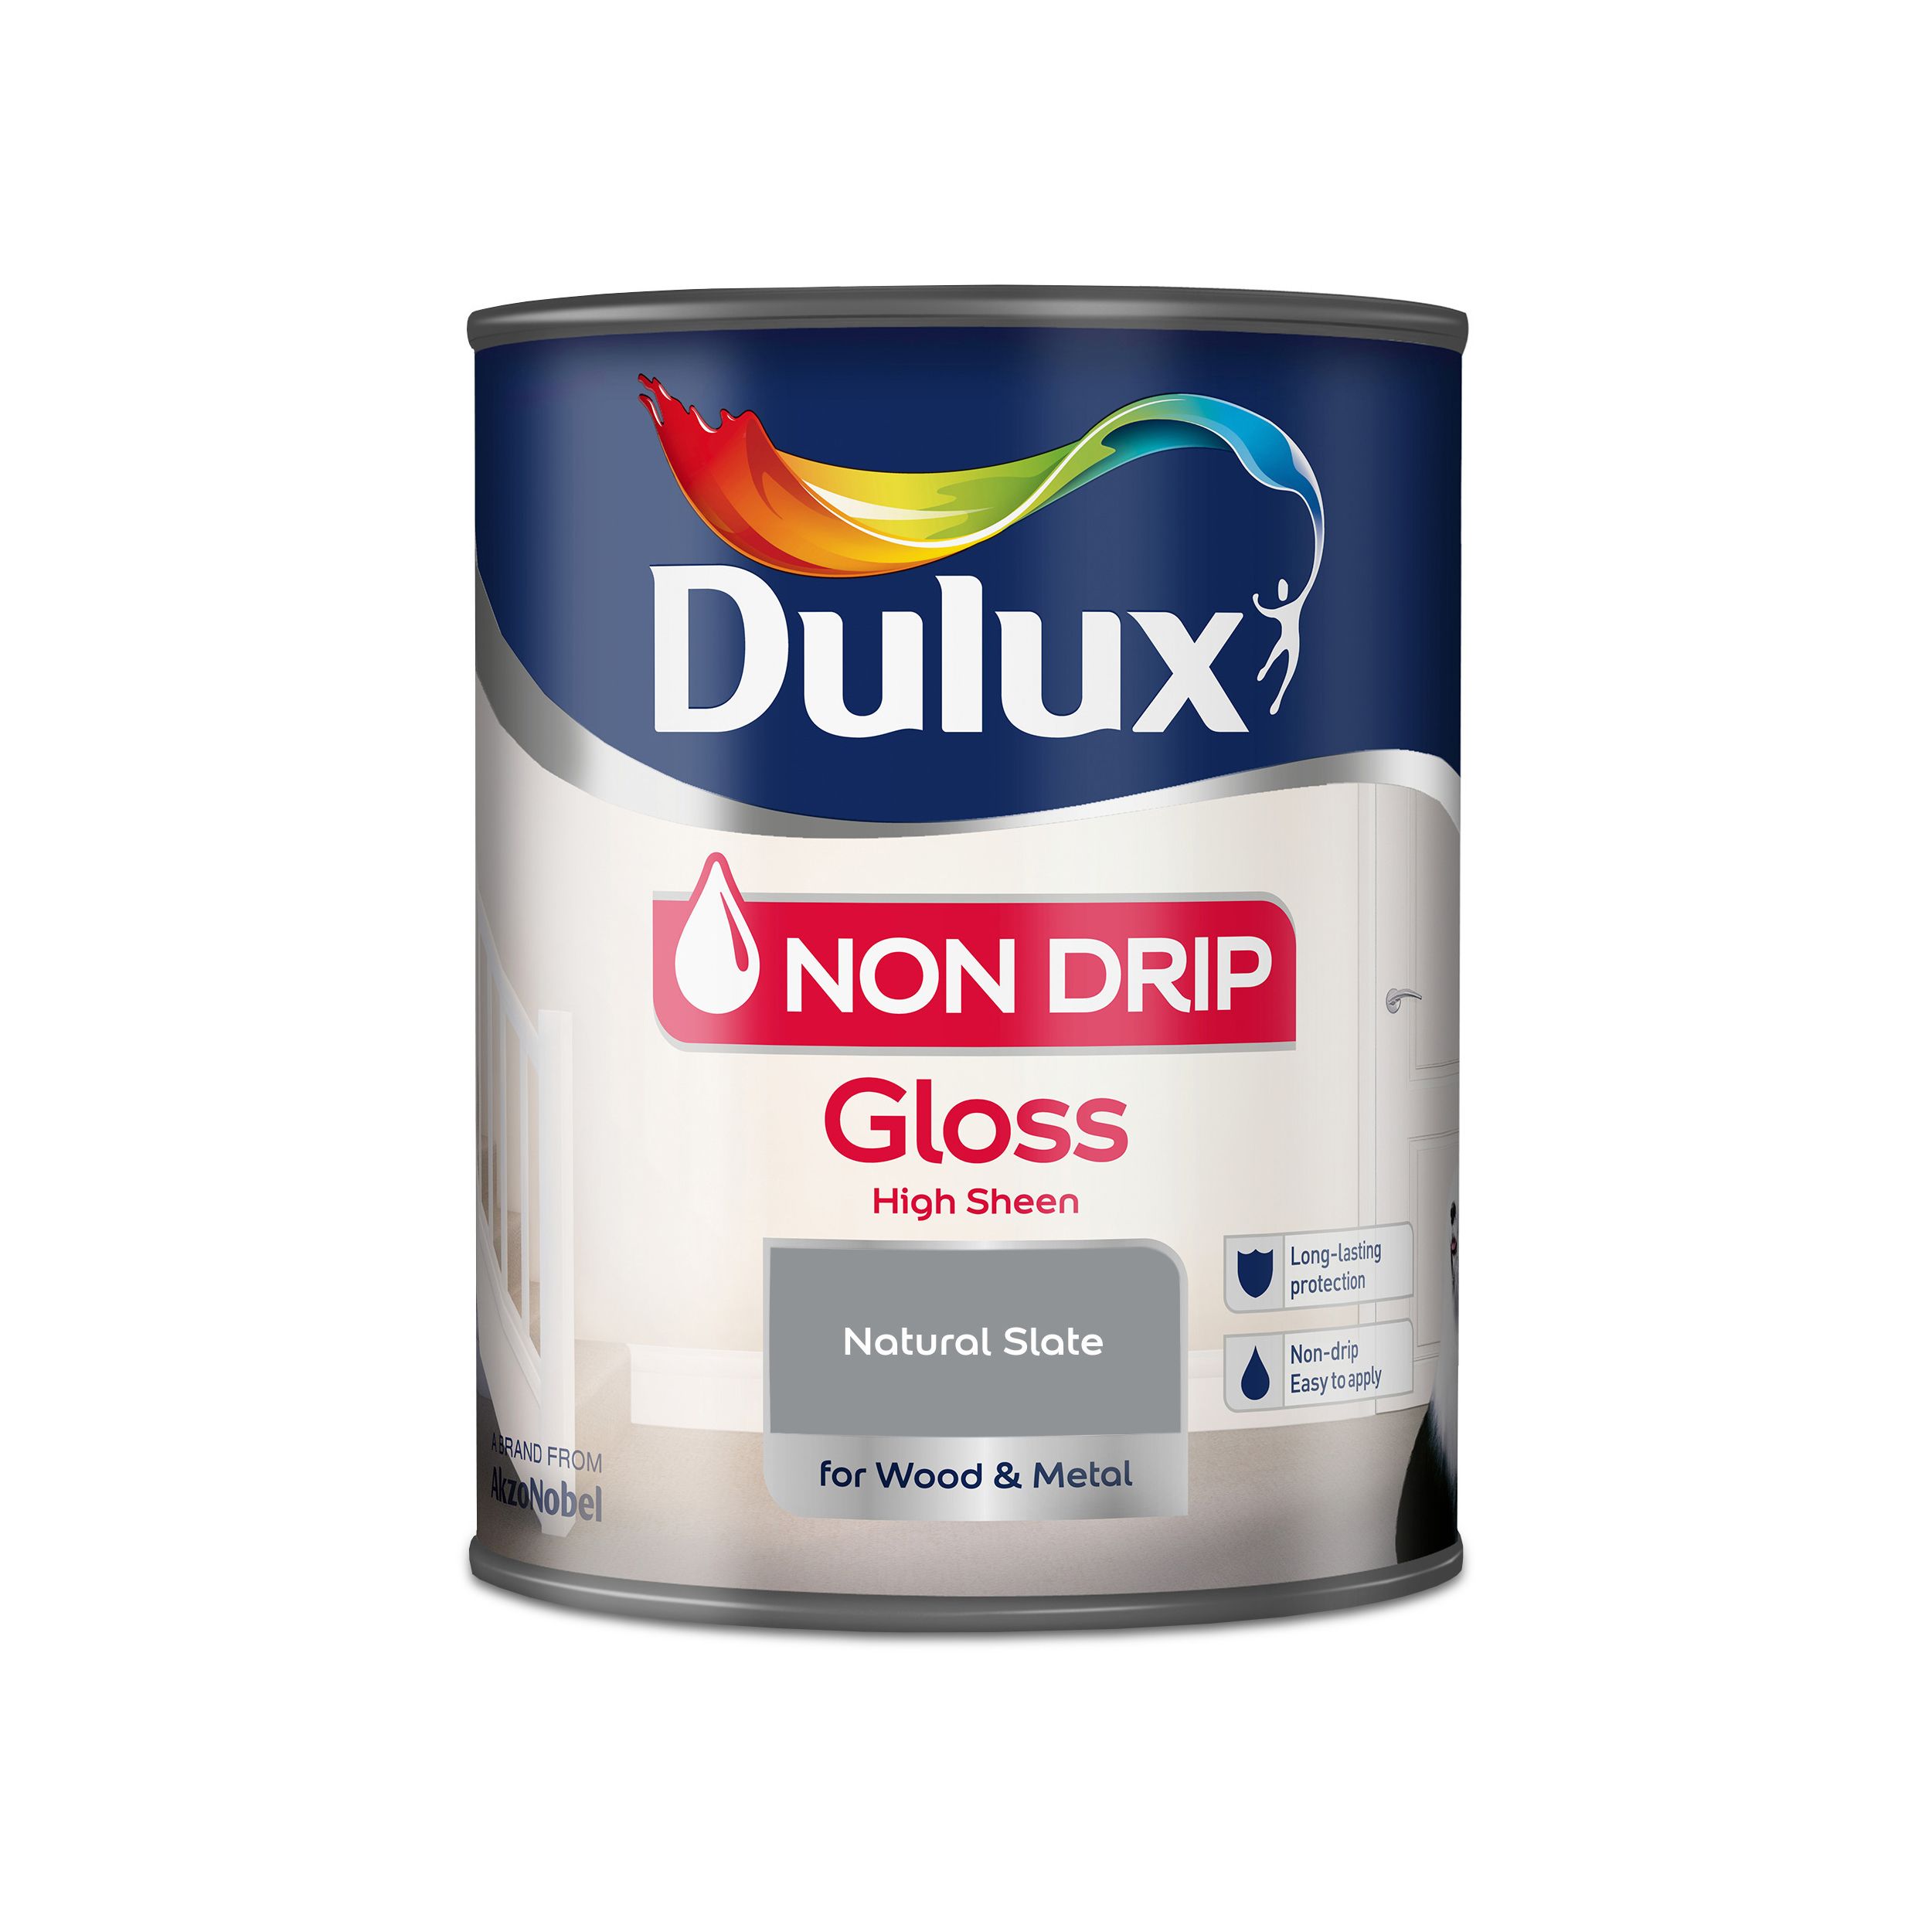 Dulux Non drip Natural slate Gloss Metal & wood paint, 750ml